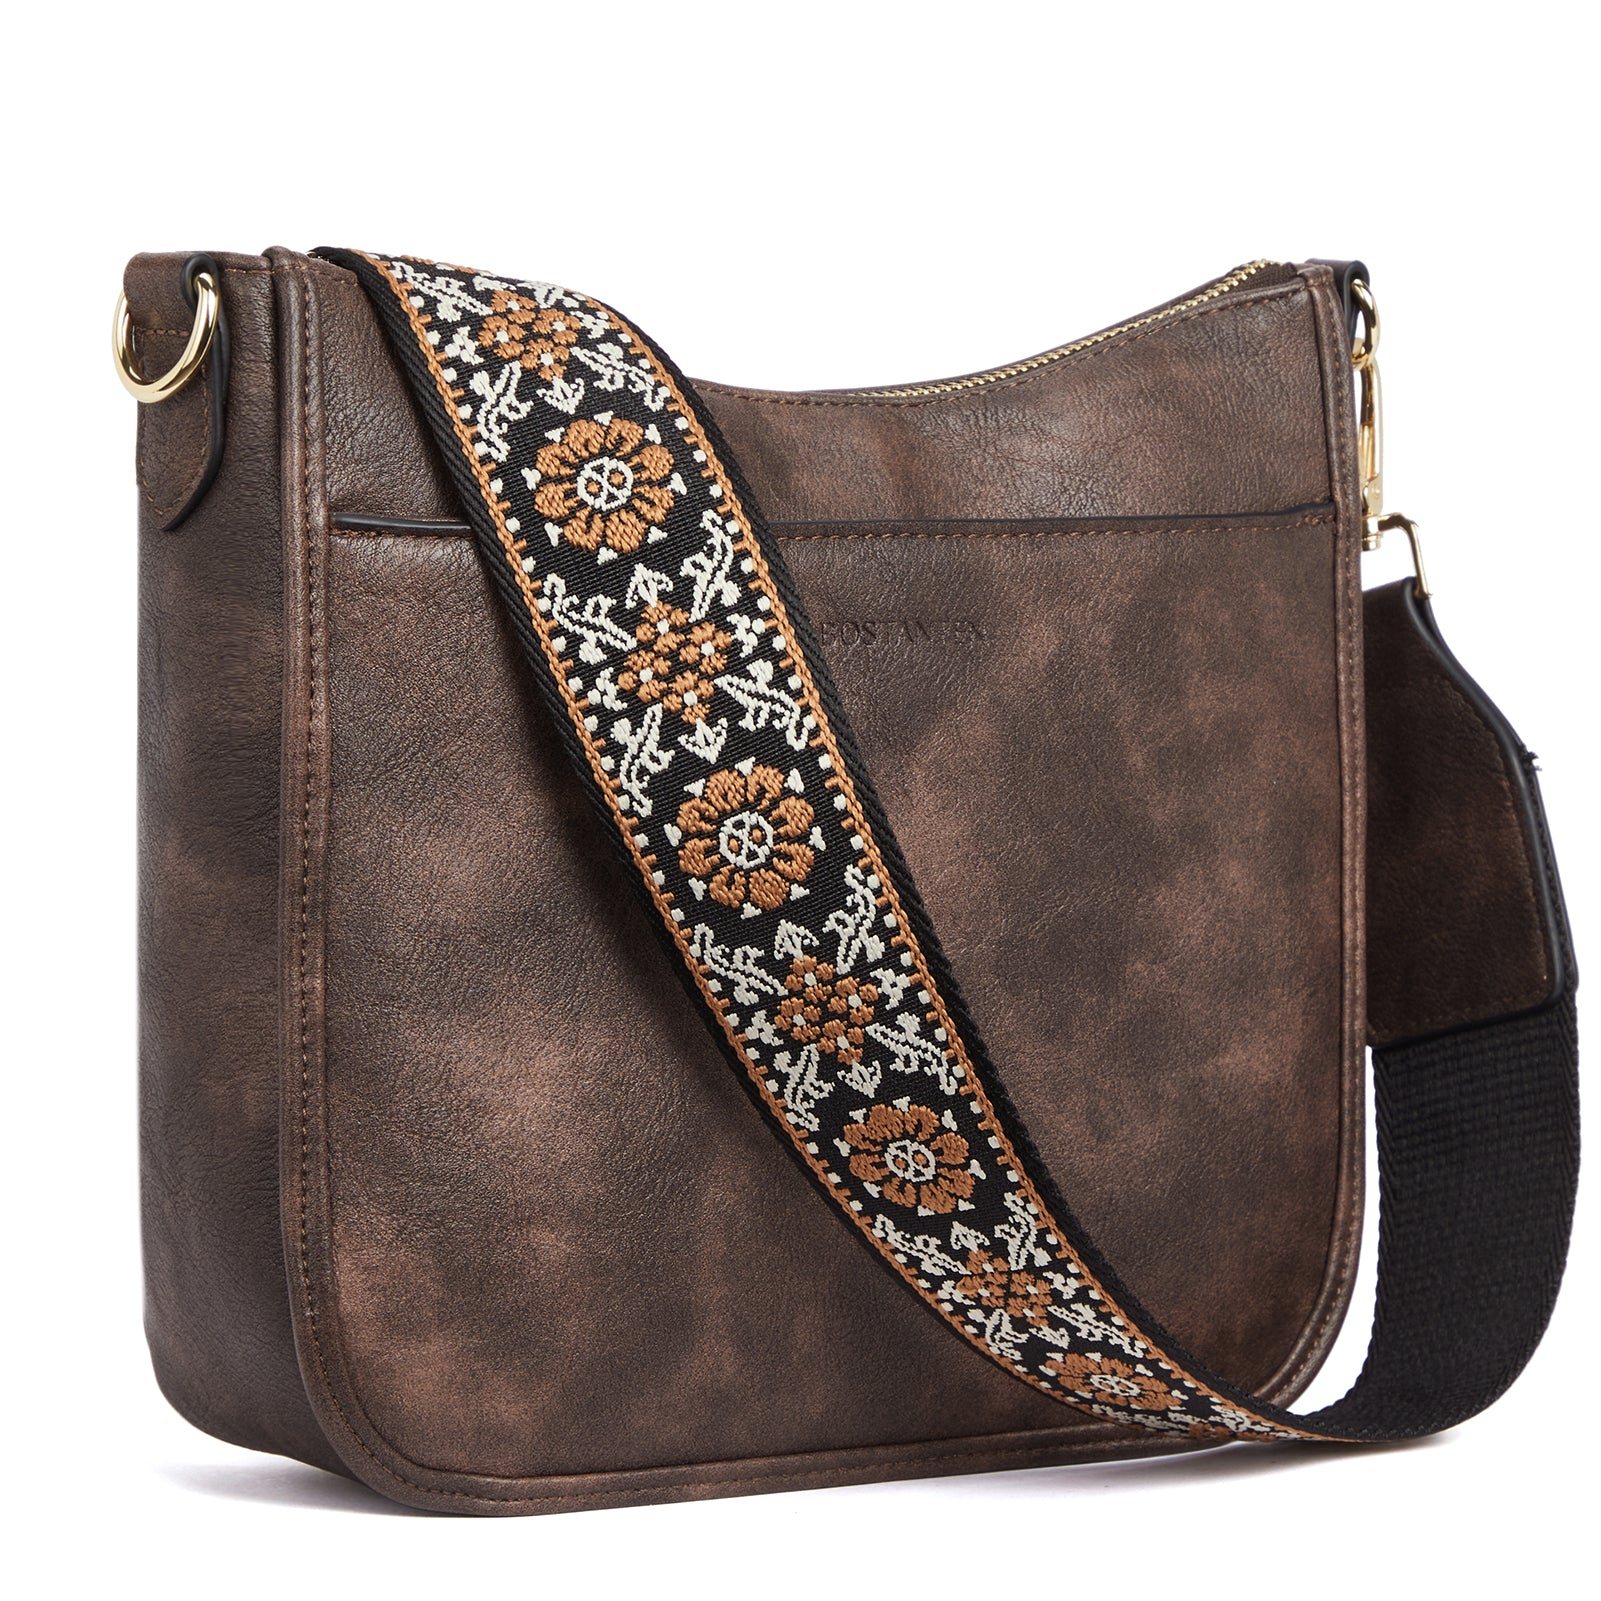 Nola Medium Hobo Crossbody Bag - The Perfect Combination of Style and ...